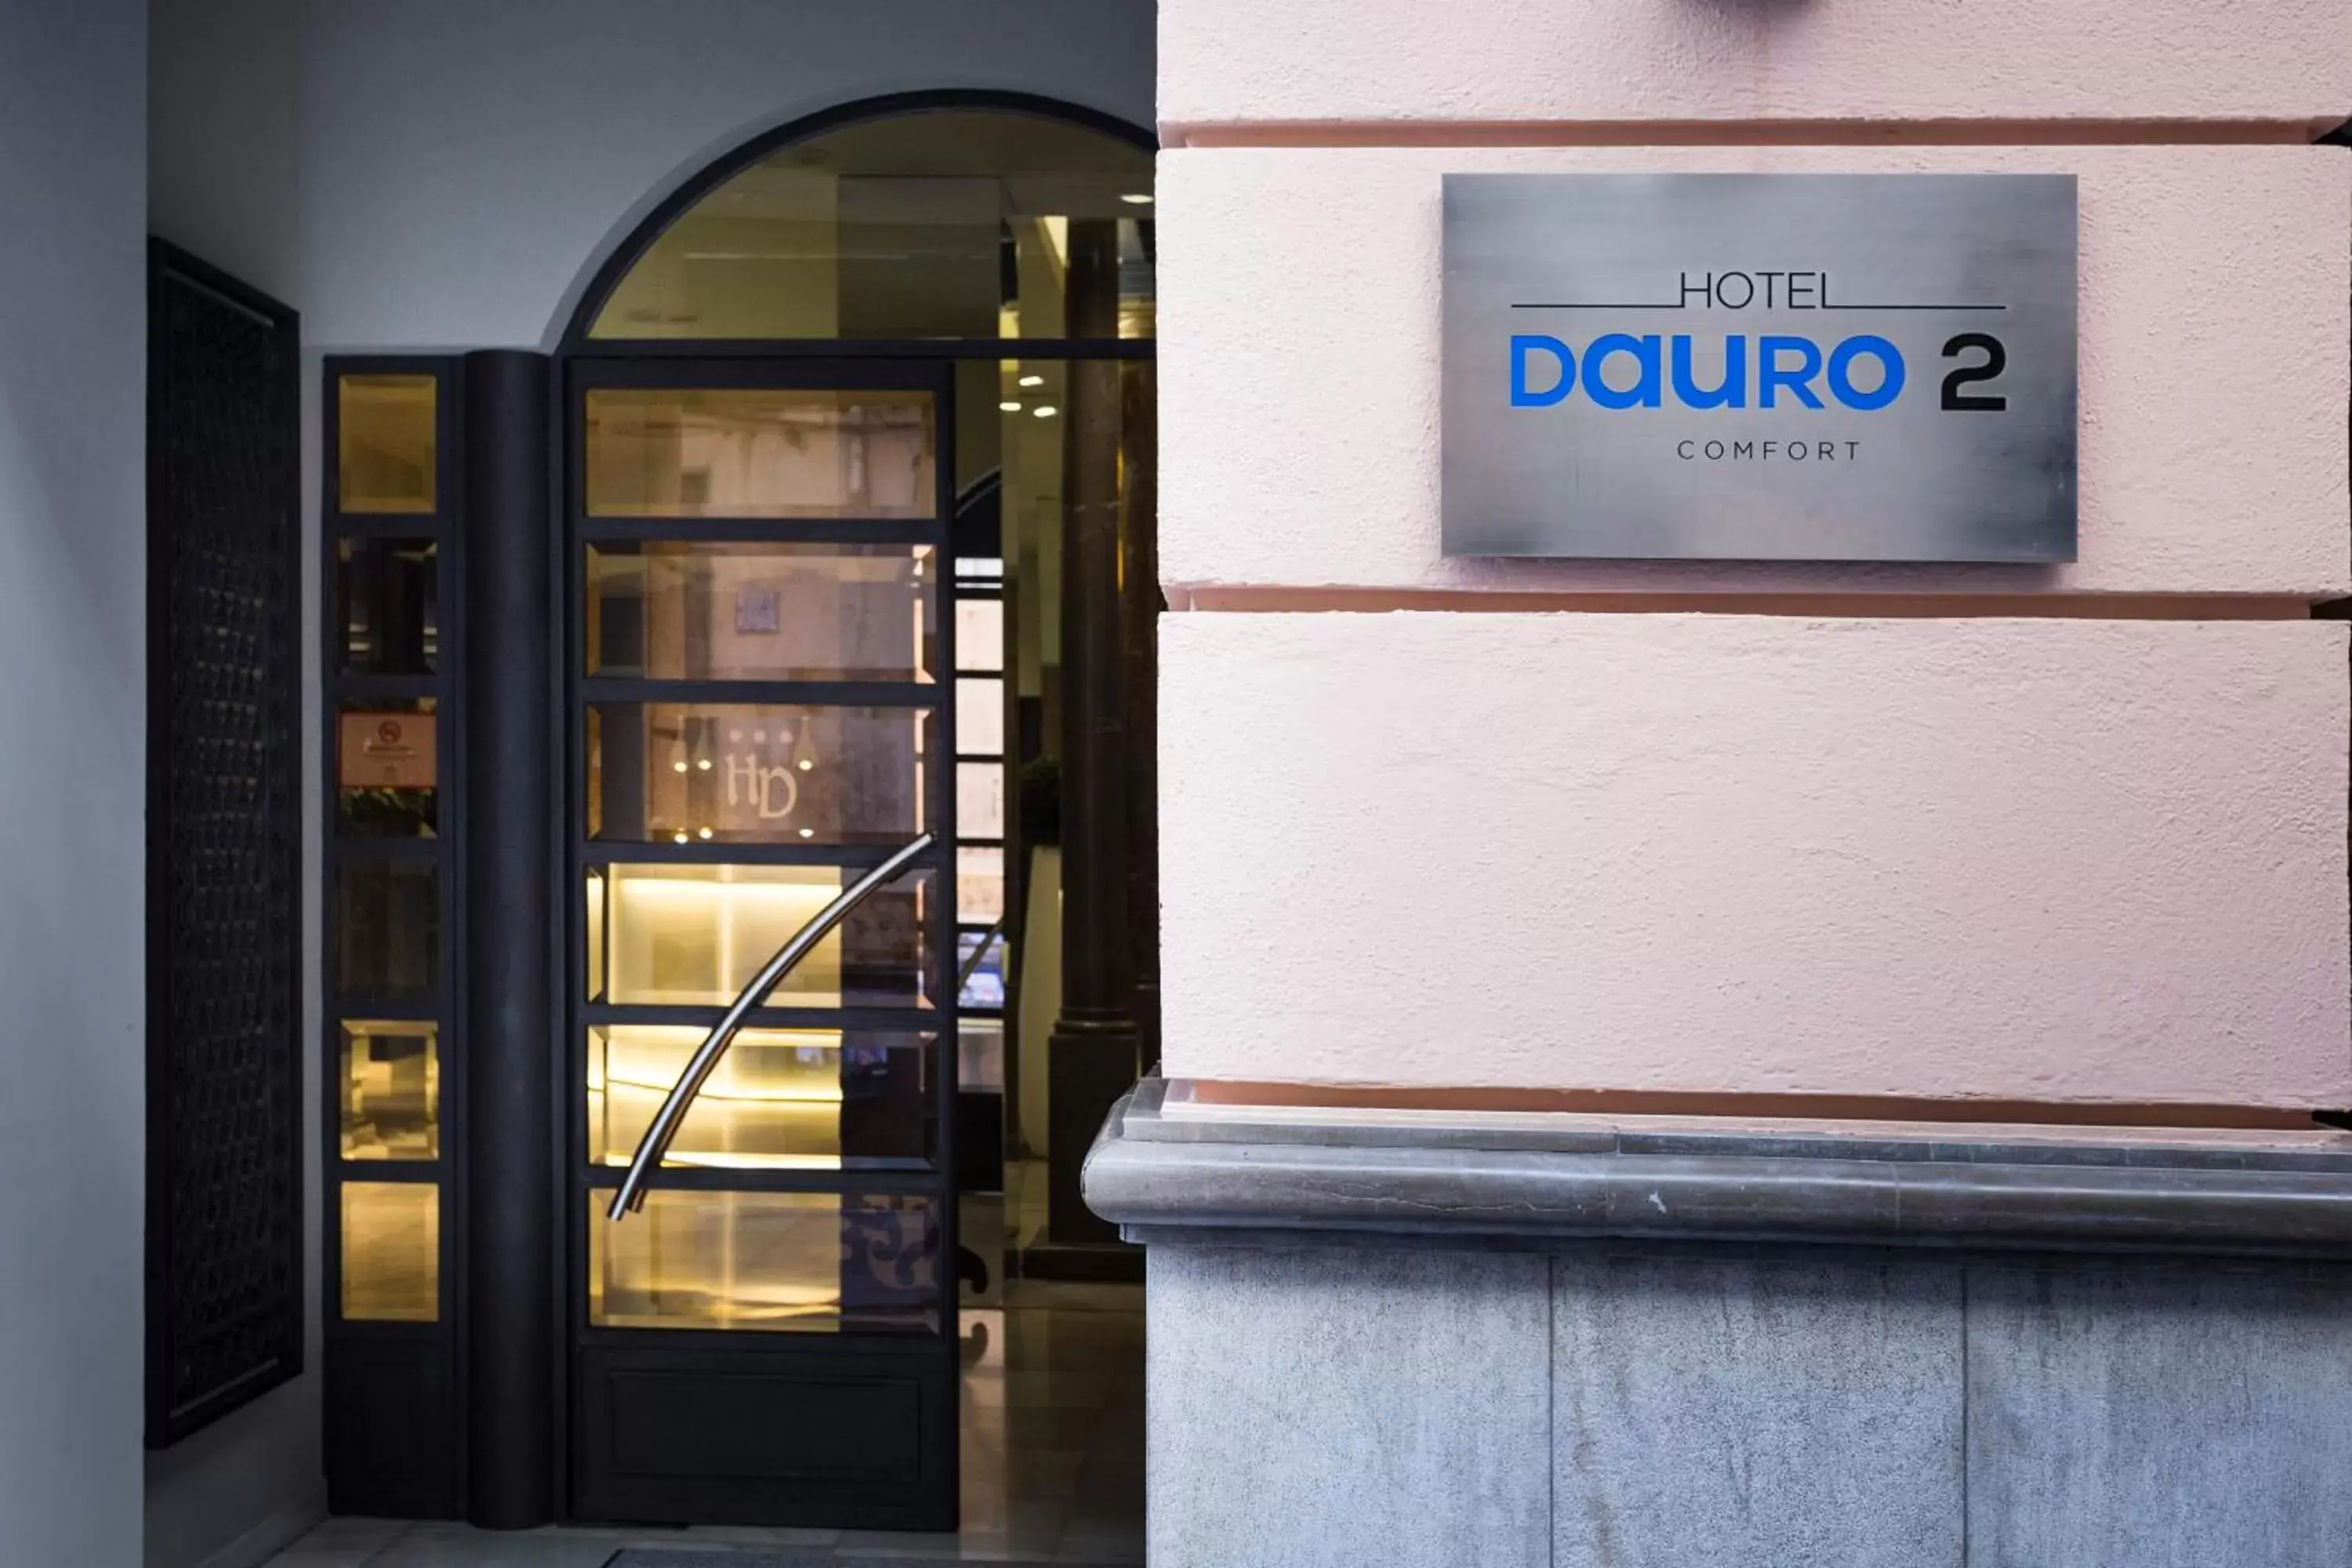 Property logo or sign in Hotel Comfort Dauro 2